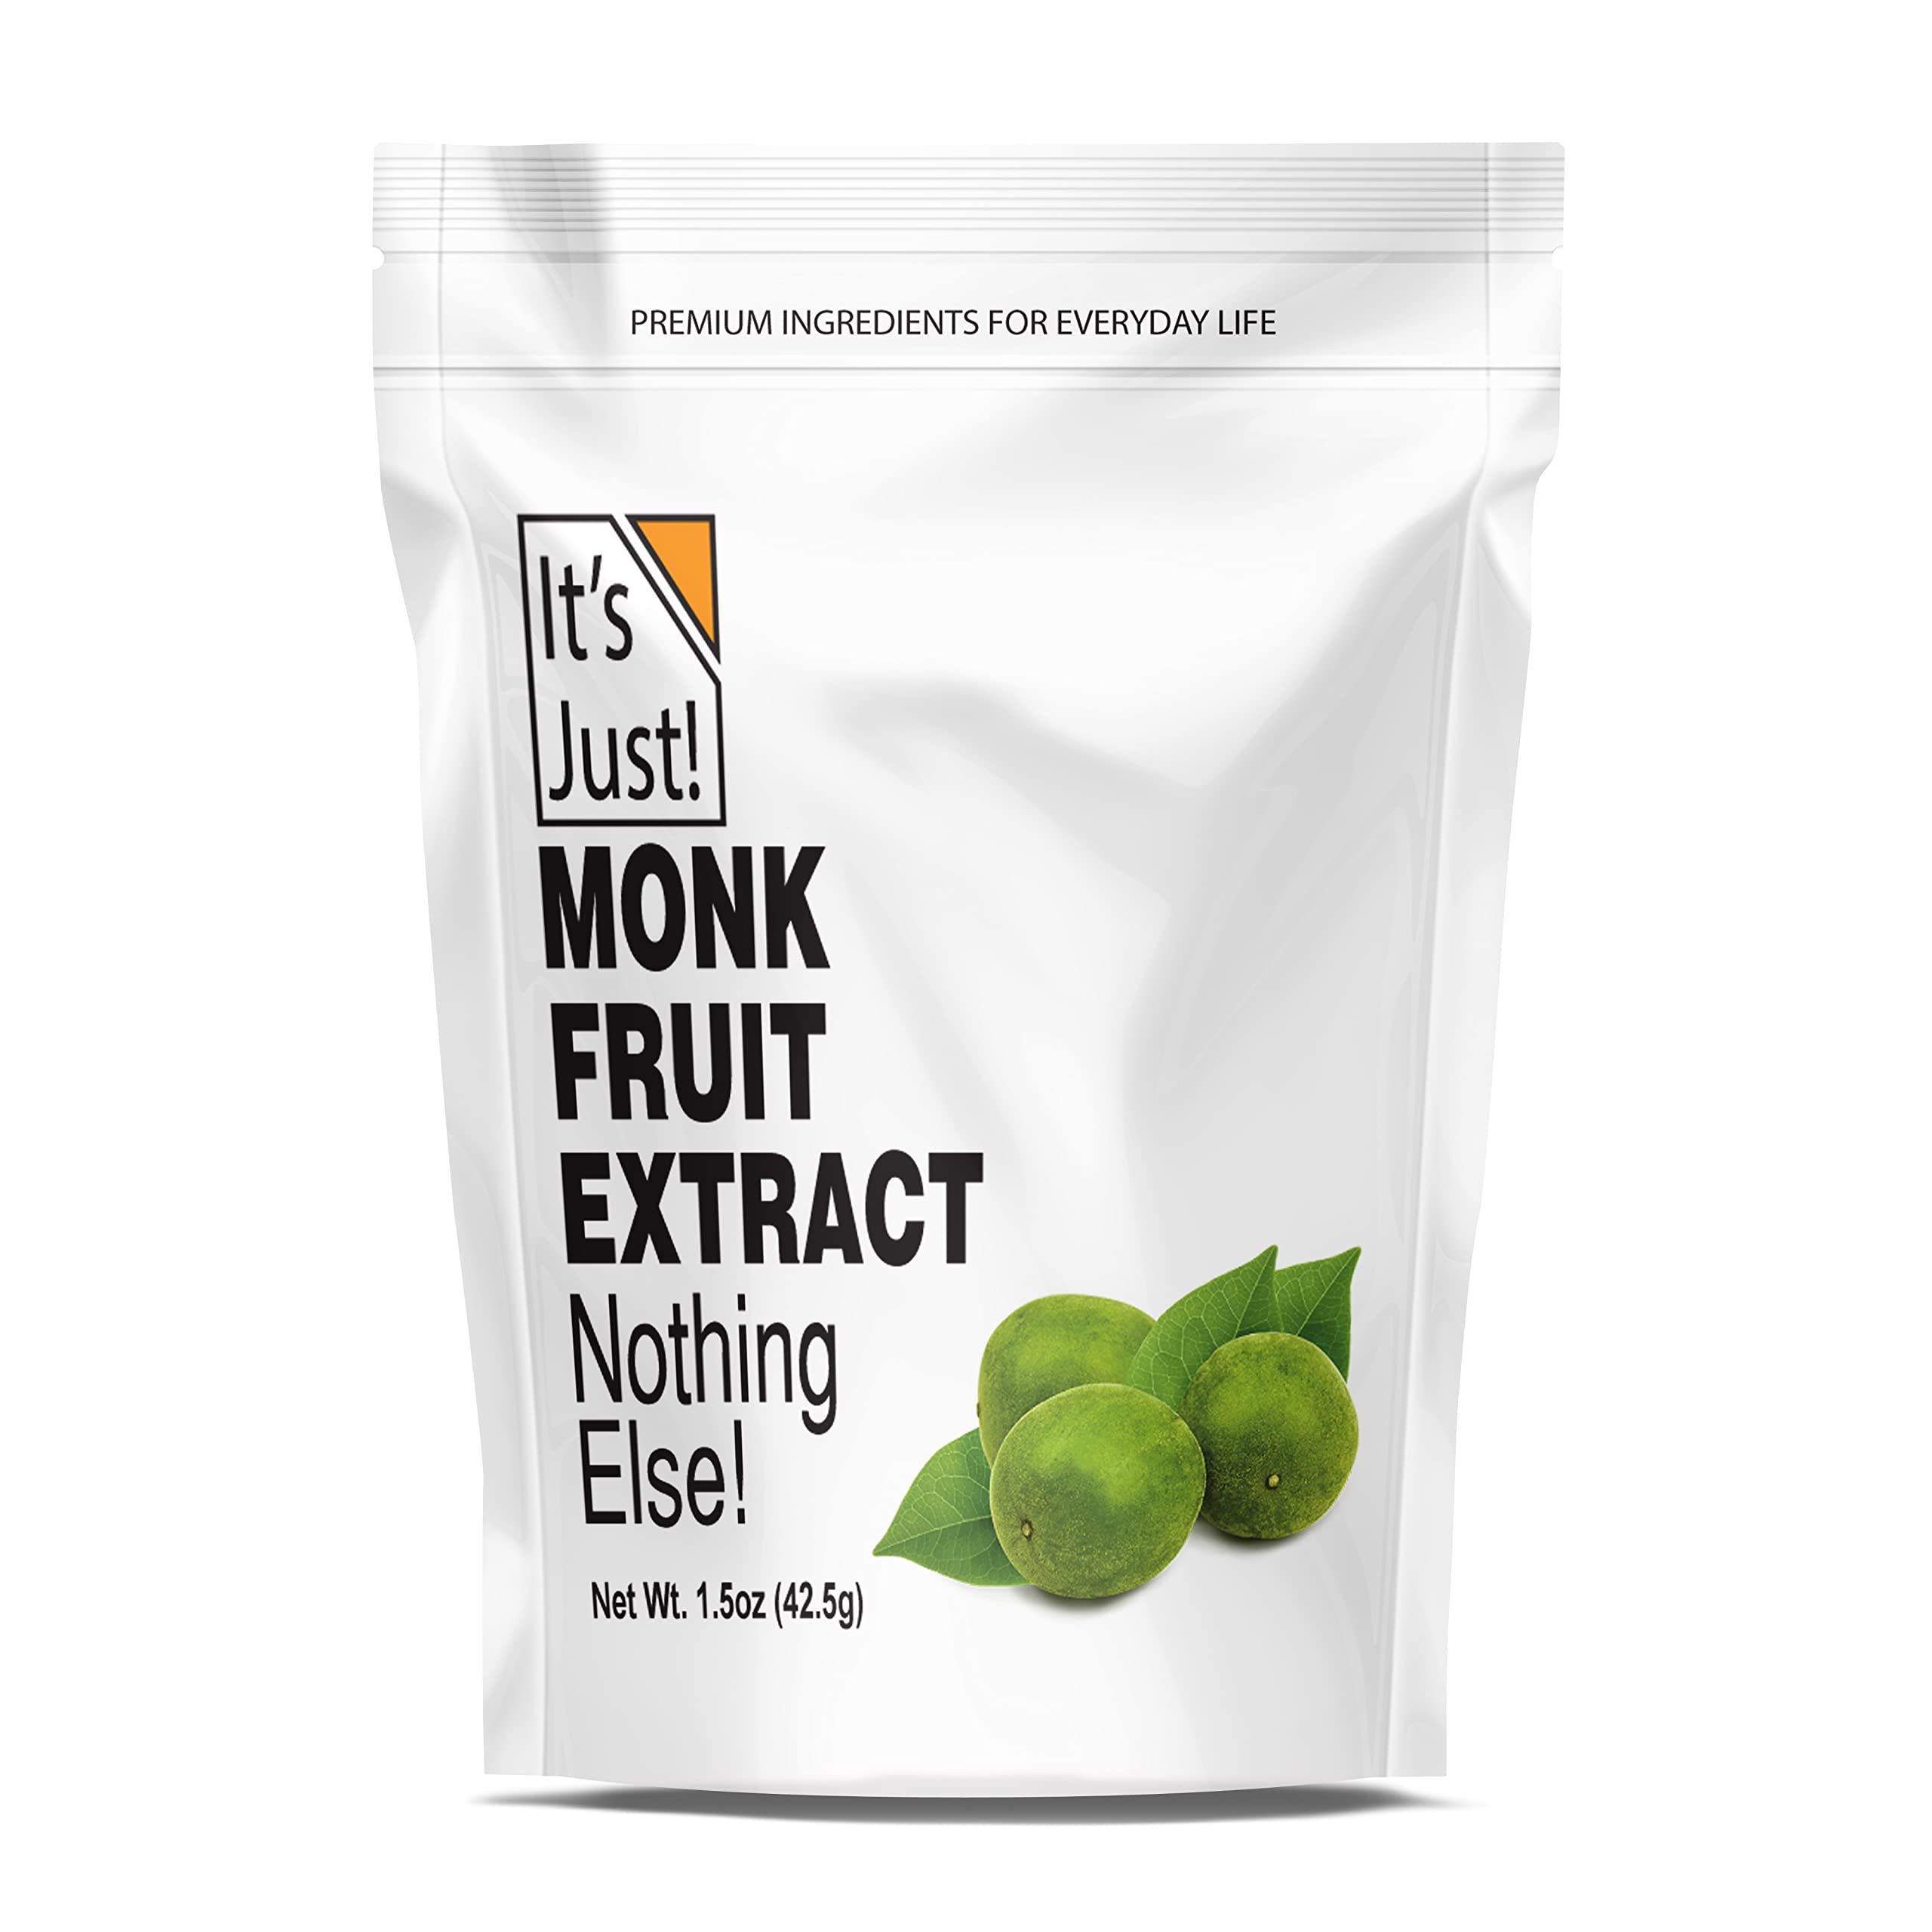 Monk Fruit Sweetener: Good or Bad?